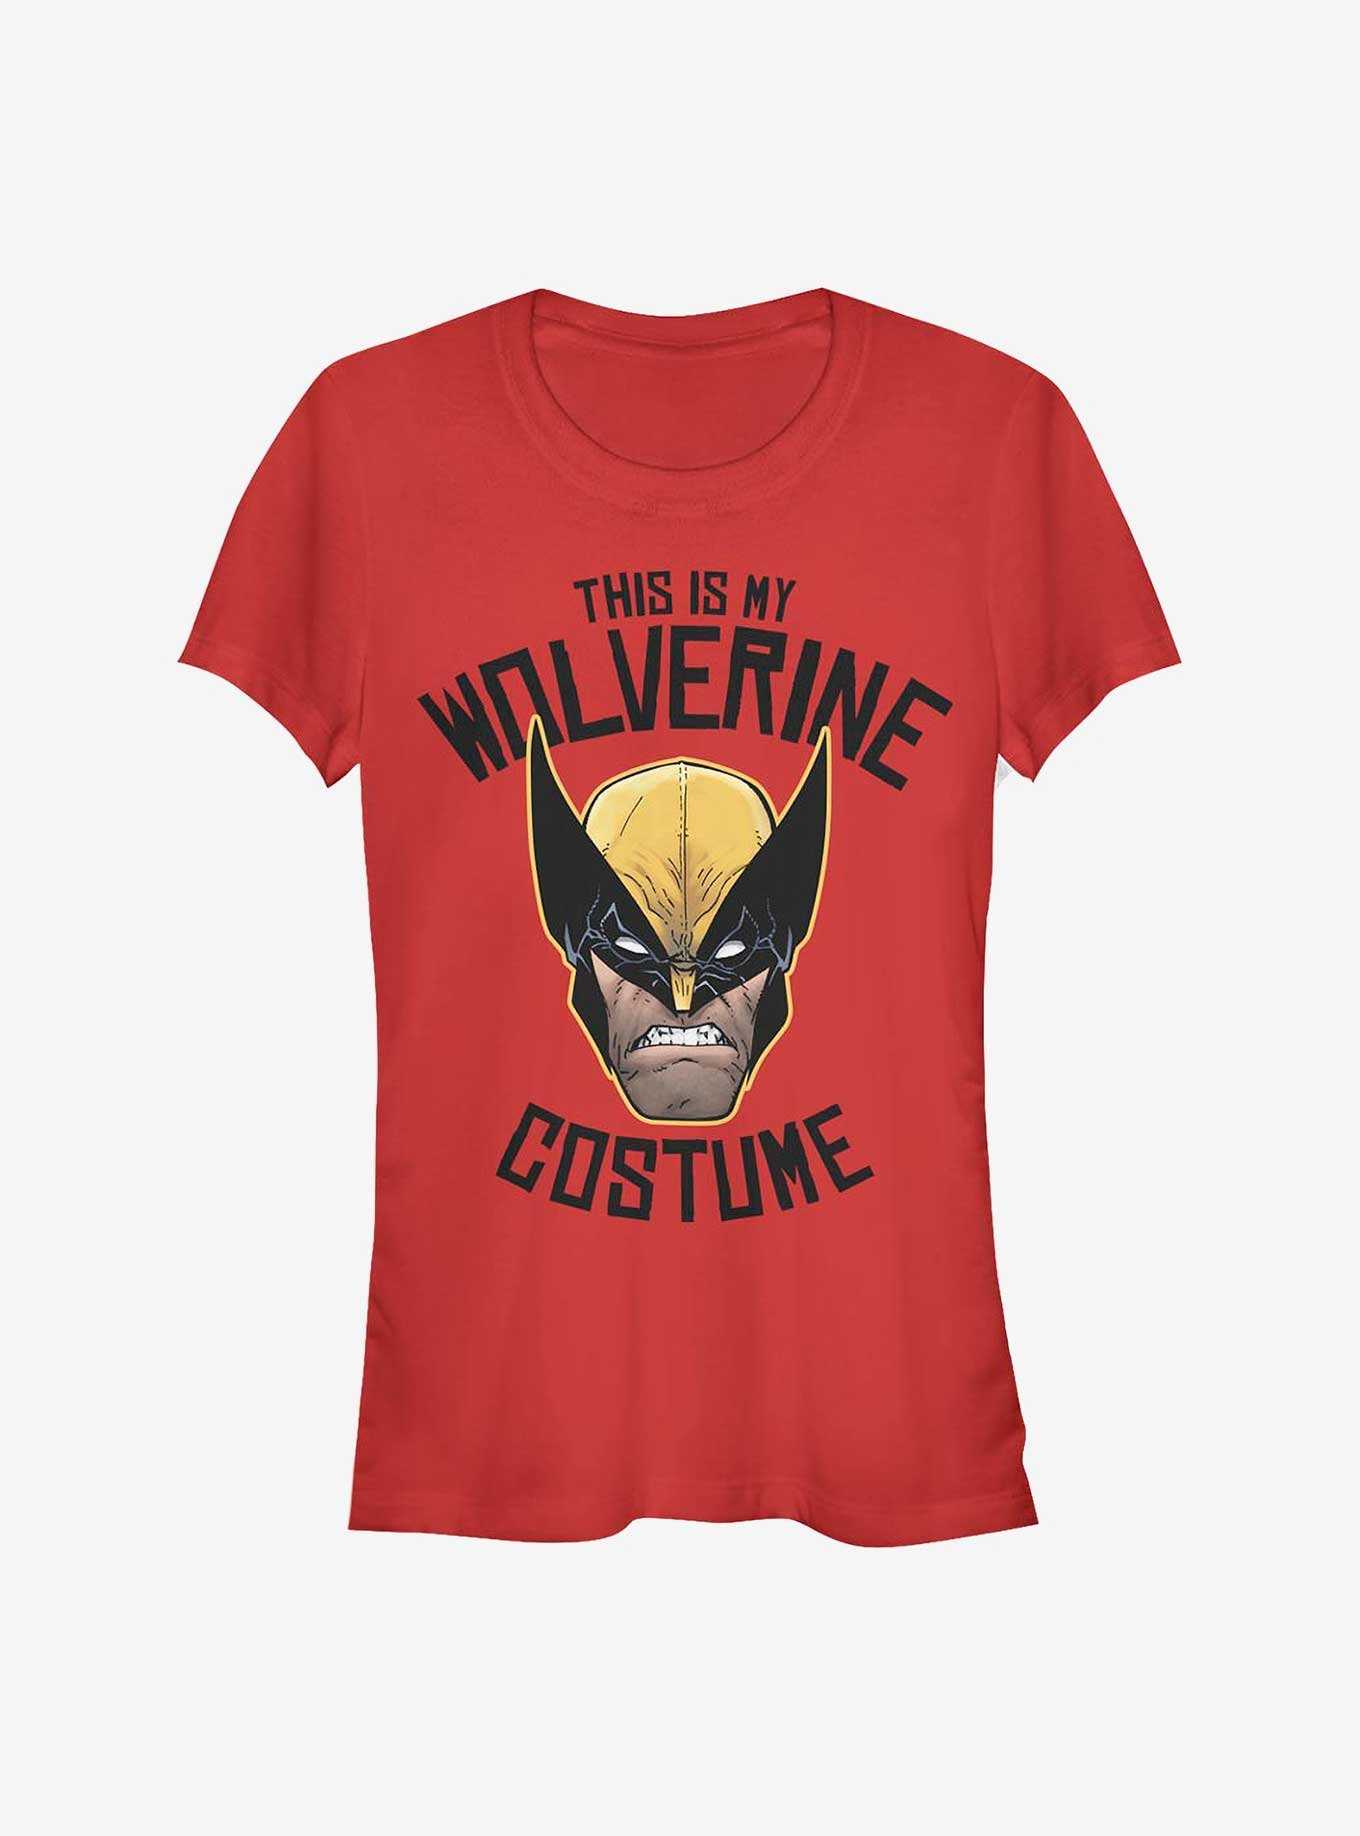 Marvel Wolverine Costume Girls T-Shirt, , hi-res